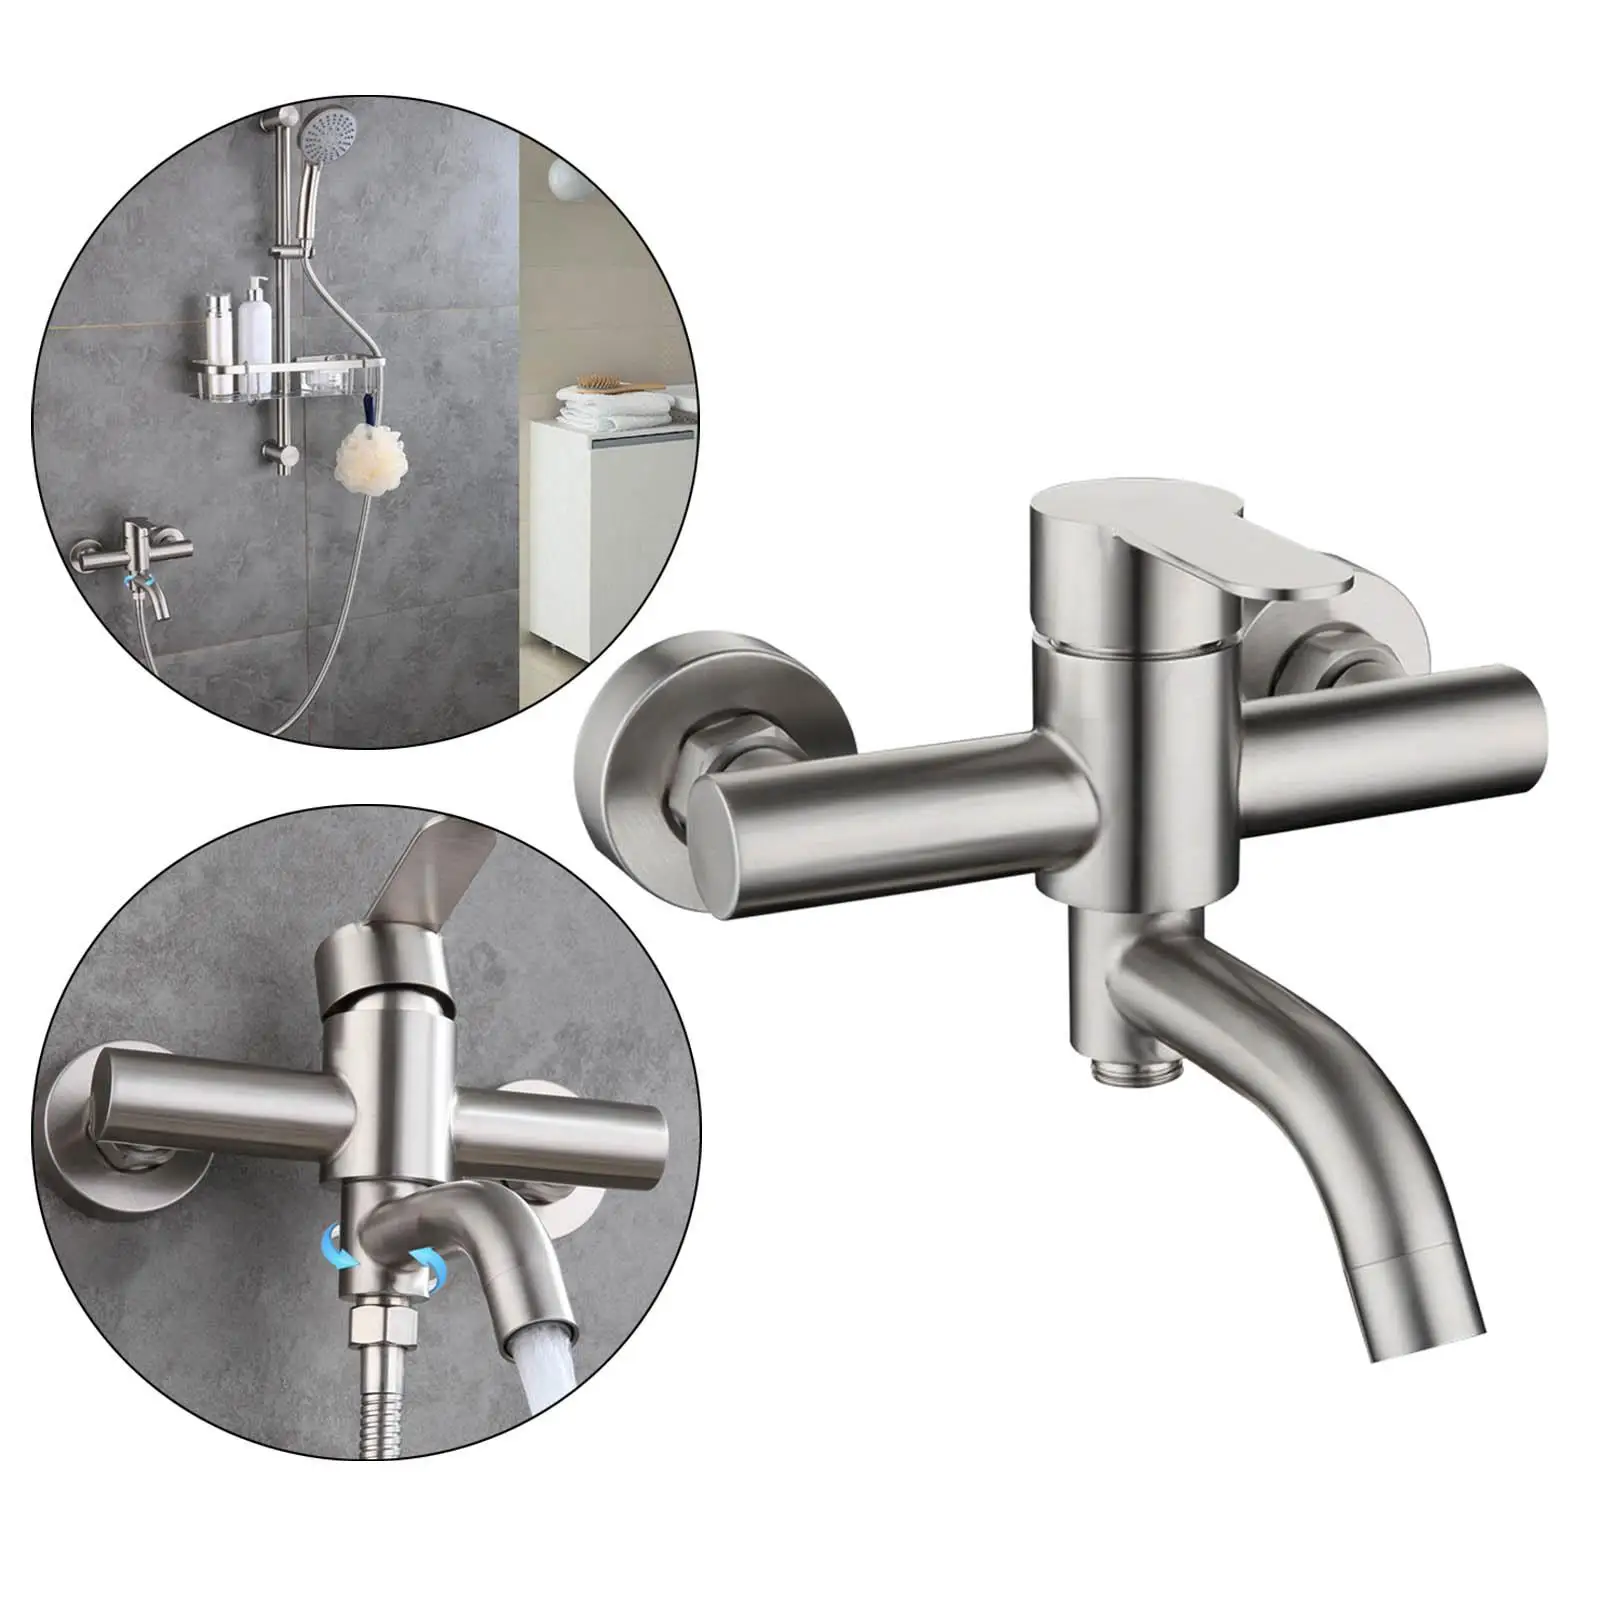 Bathroom Shower Mixer Faucet Bathroom Accessories Universal Singlem Handle Install Range 13-17cm Bath Tub Mixing